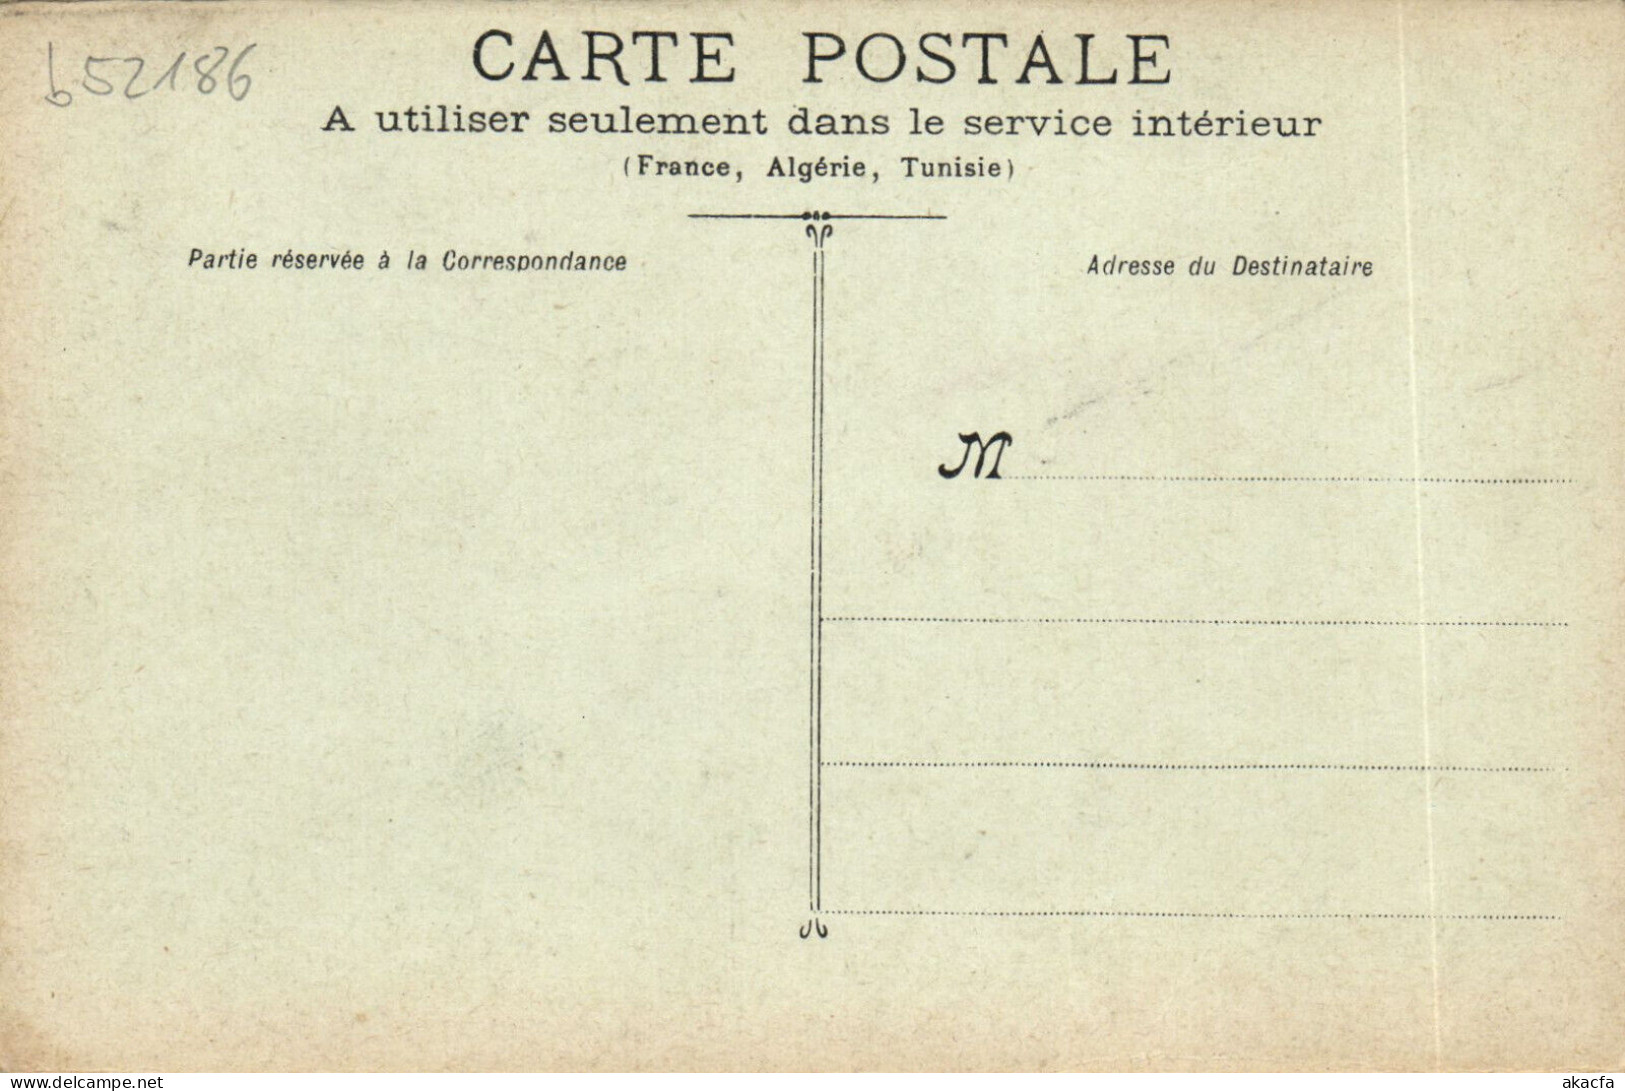 PC ARTIST SIGNED, CH. BEAUVAIS, SPORTS, LA CHASSE, Vintage Postcard (b52186) - Beauvais